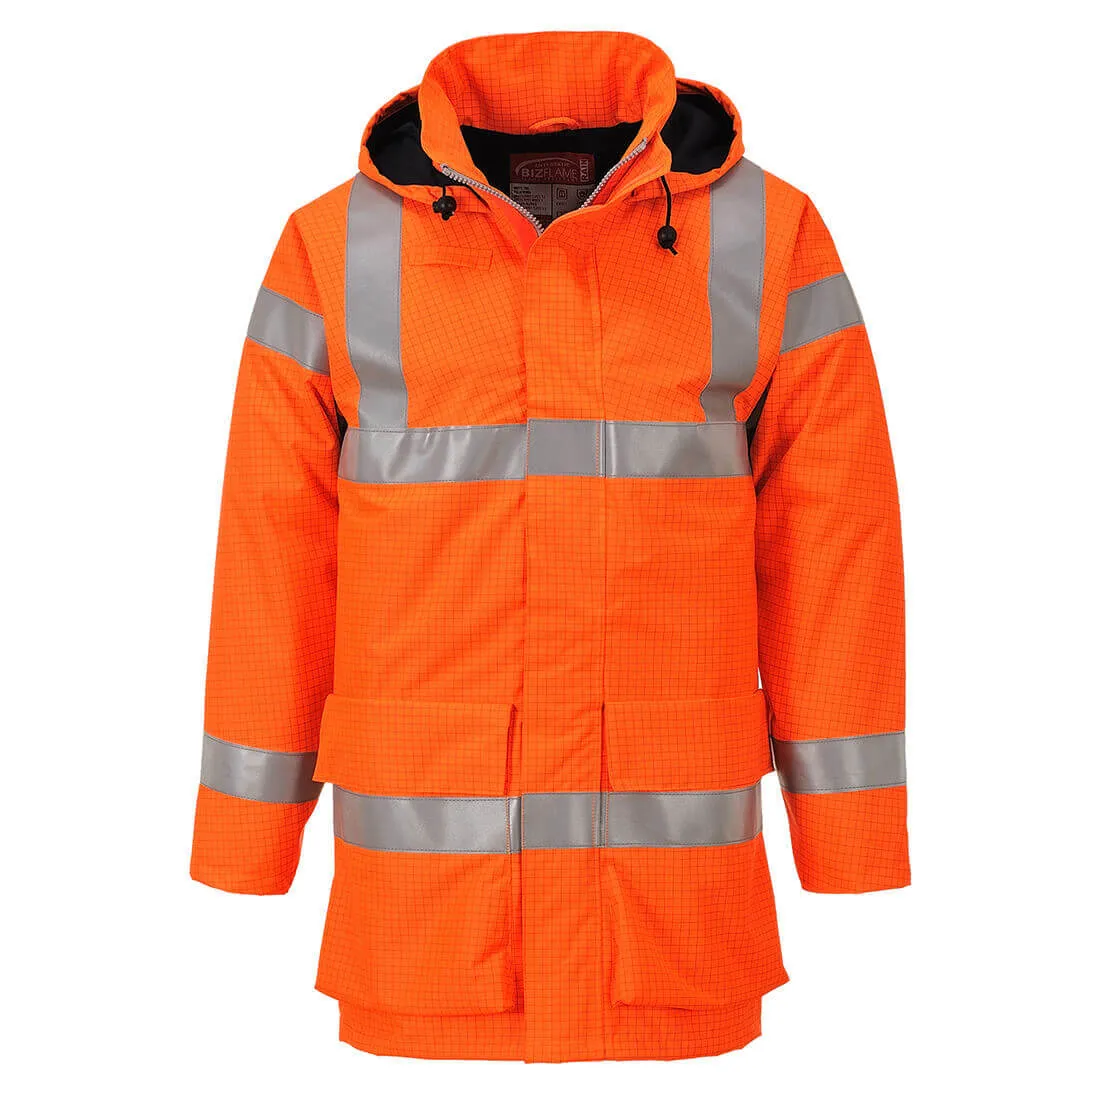 Biz Flame Hi Vis Flame Resistant Rain Multi Lite Jacket - Orange, M